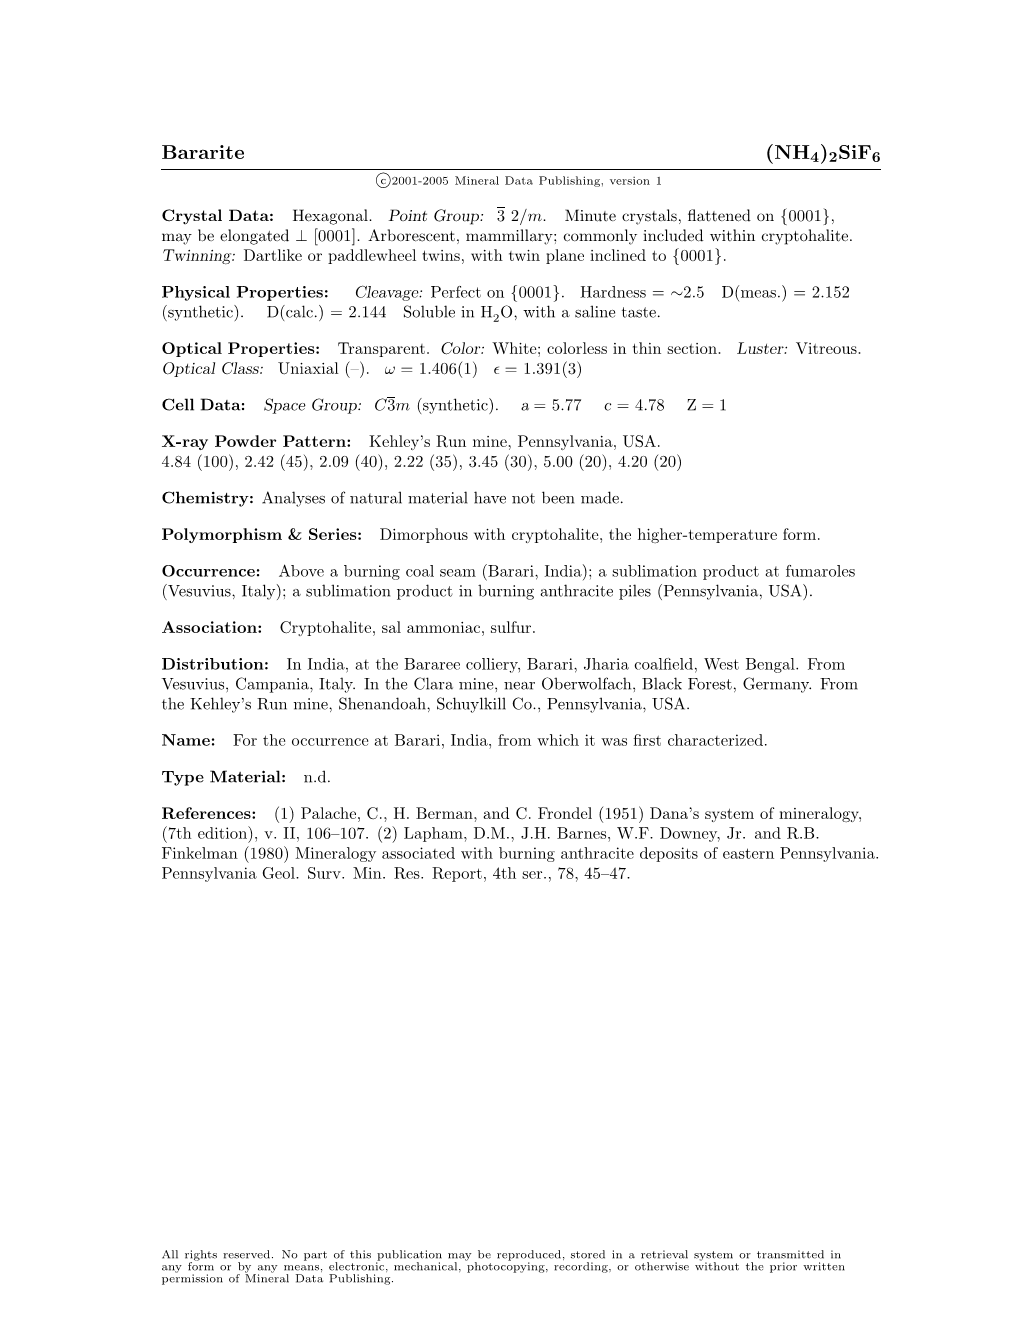 (NH4)2Sif6 C 2001-2005 Mineral Data Publishing, Version 1